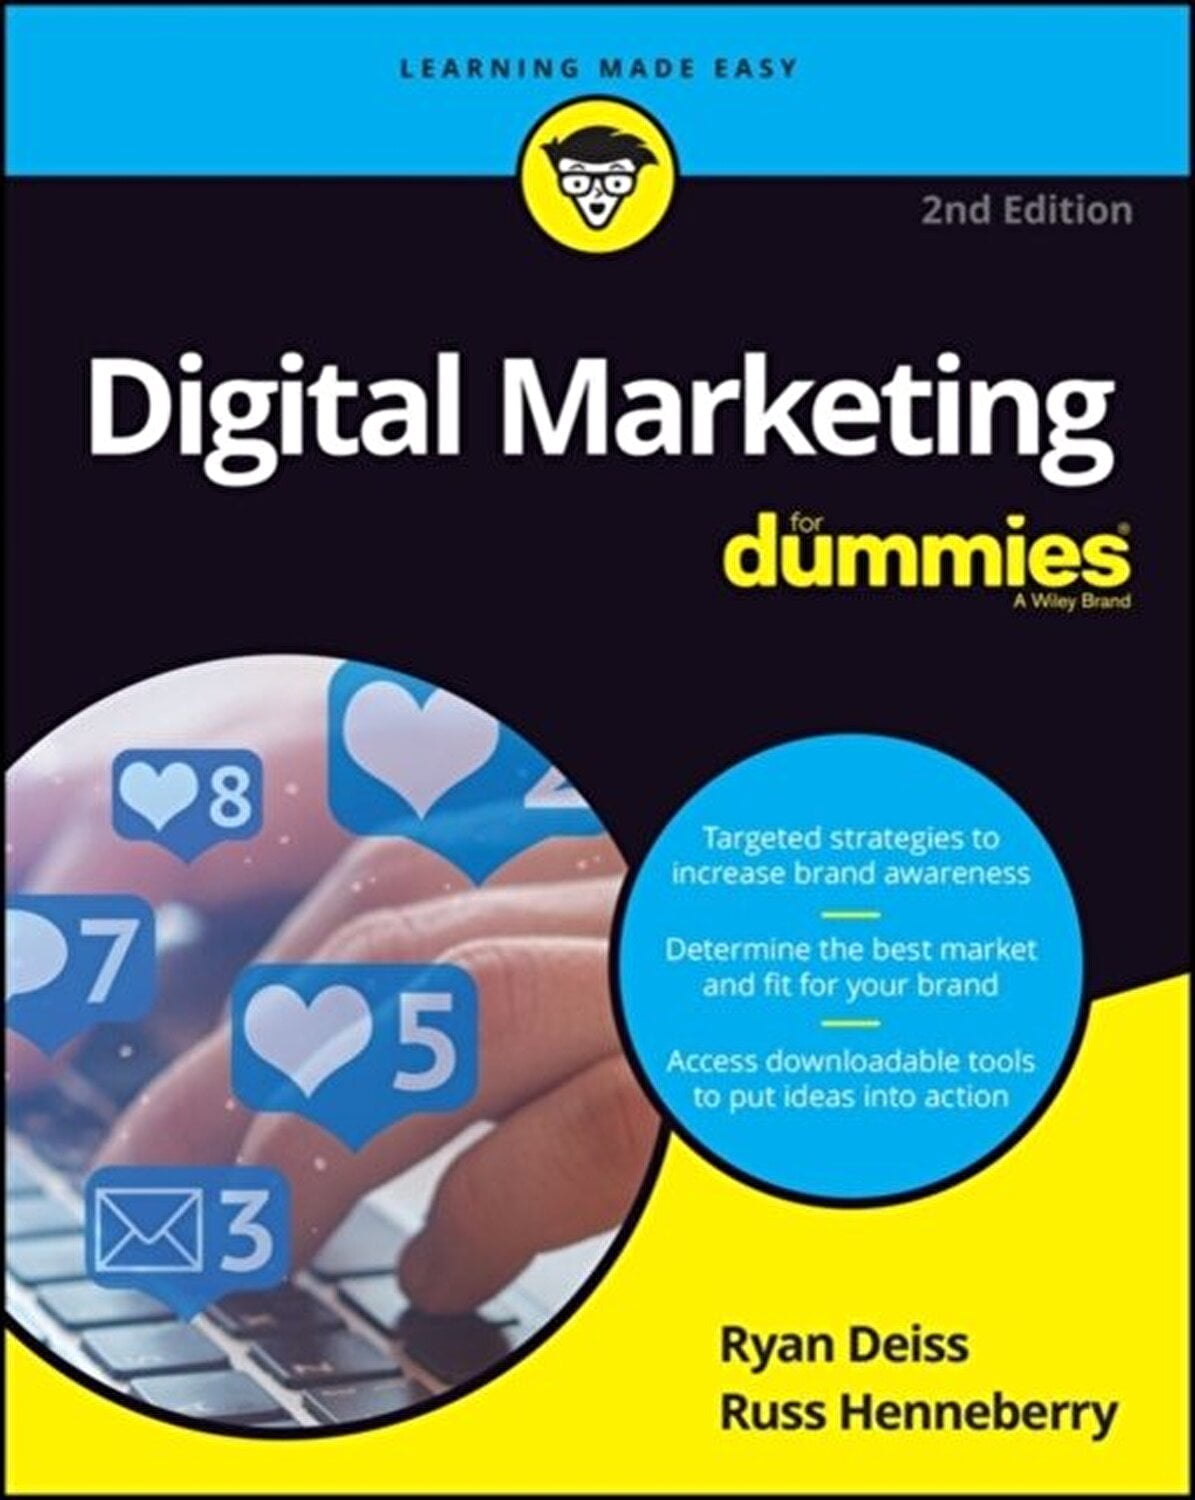 Digital Marketing for Dummies-Ryan Deiss and Russ Hennesberry